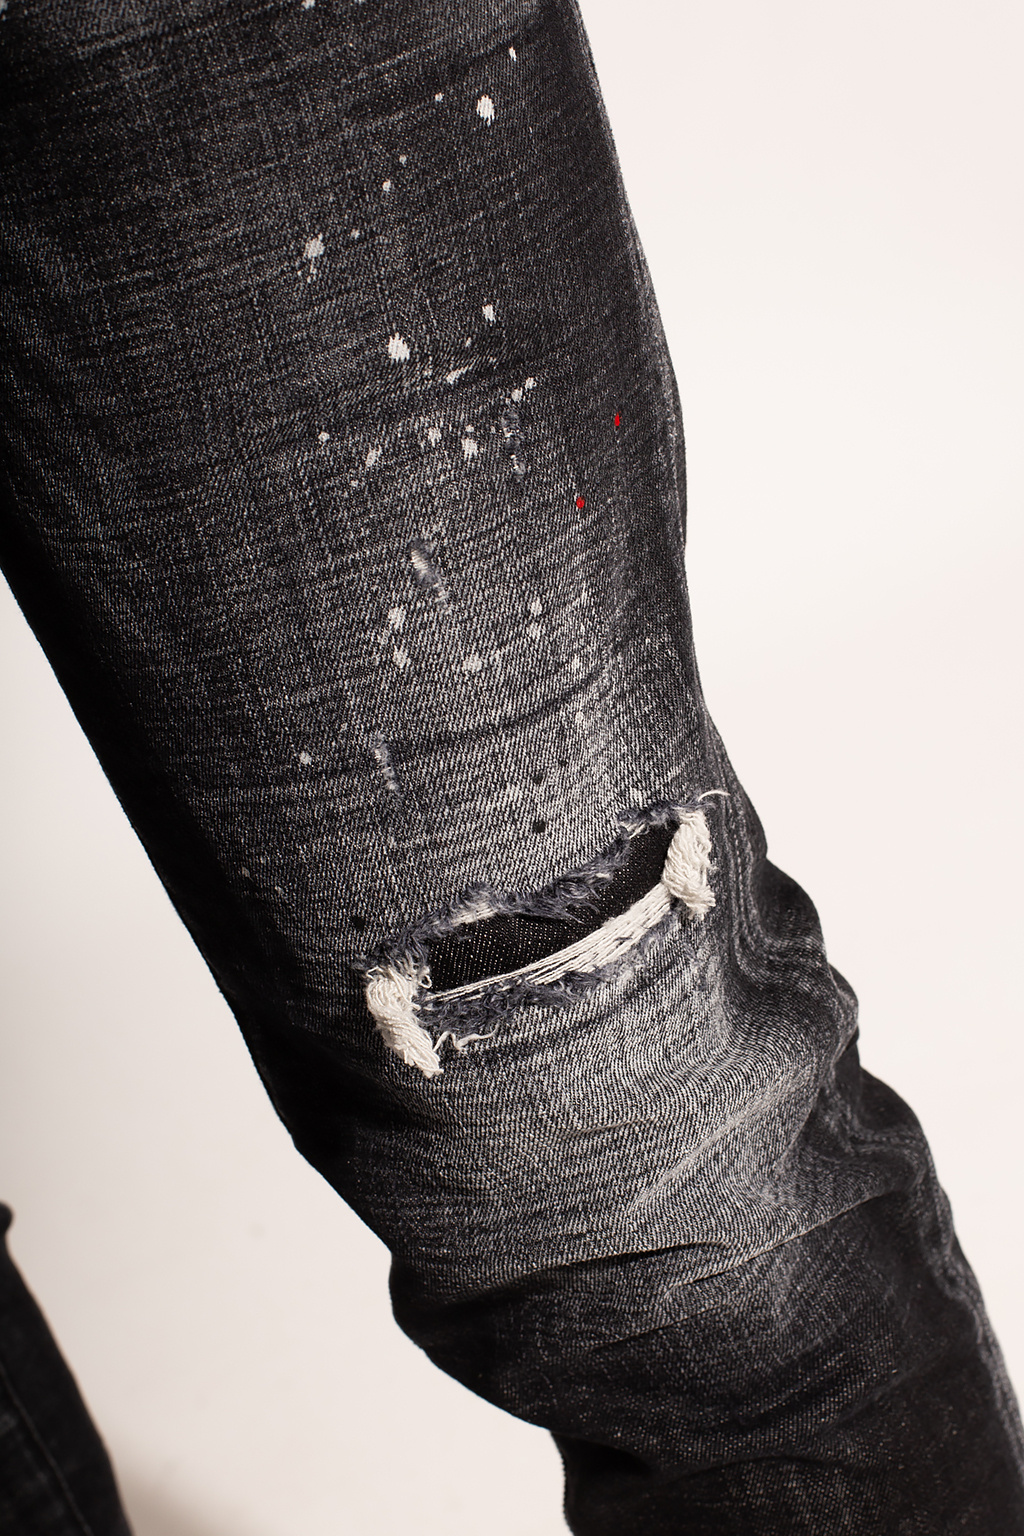 Dsquared2 'Cool Guy Jean' jeans | Men's Clothing | IetpShops